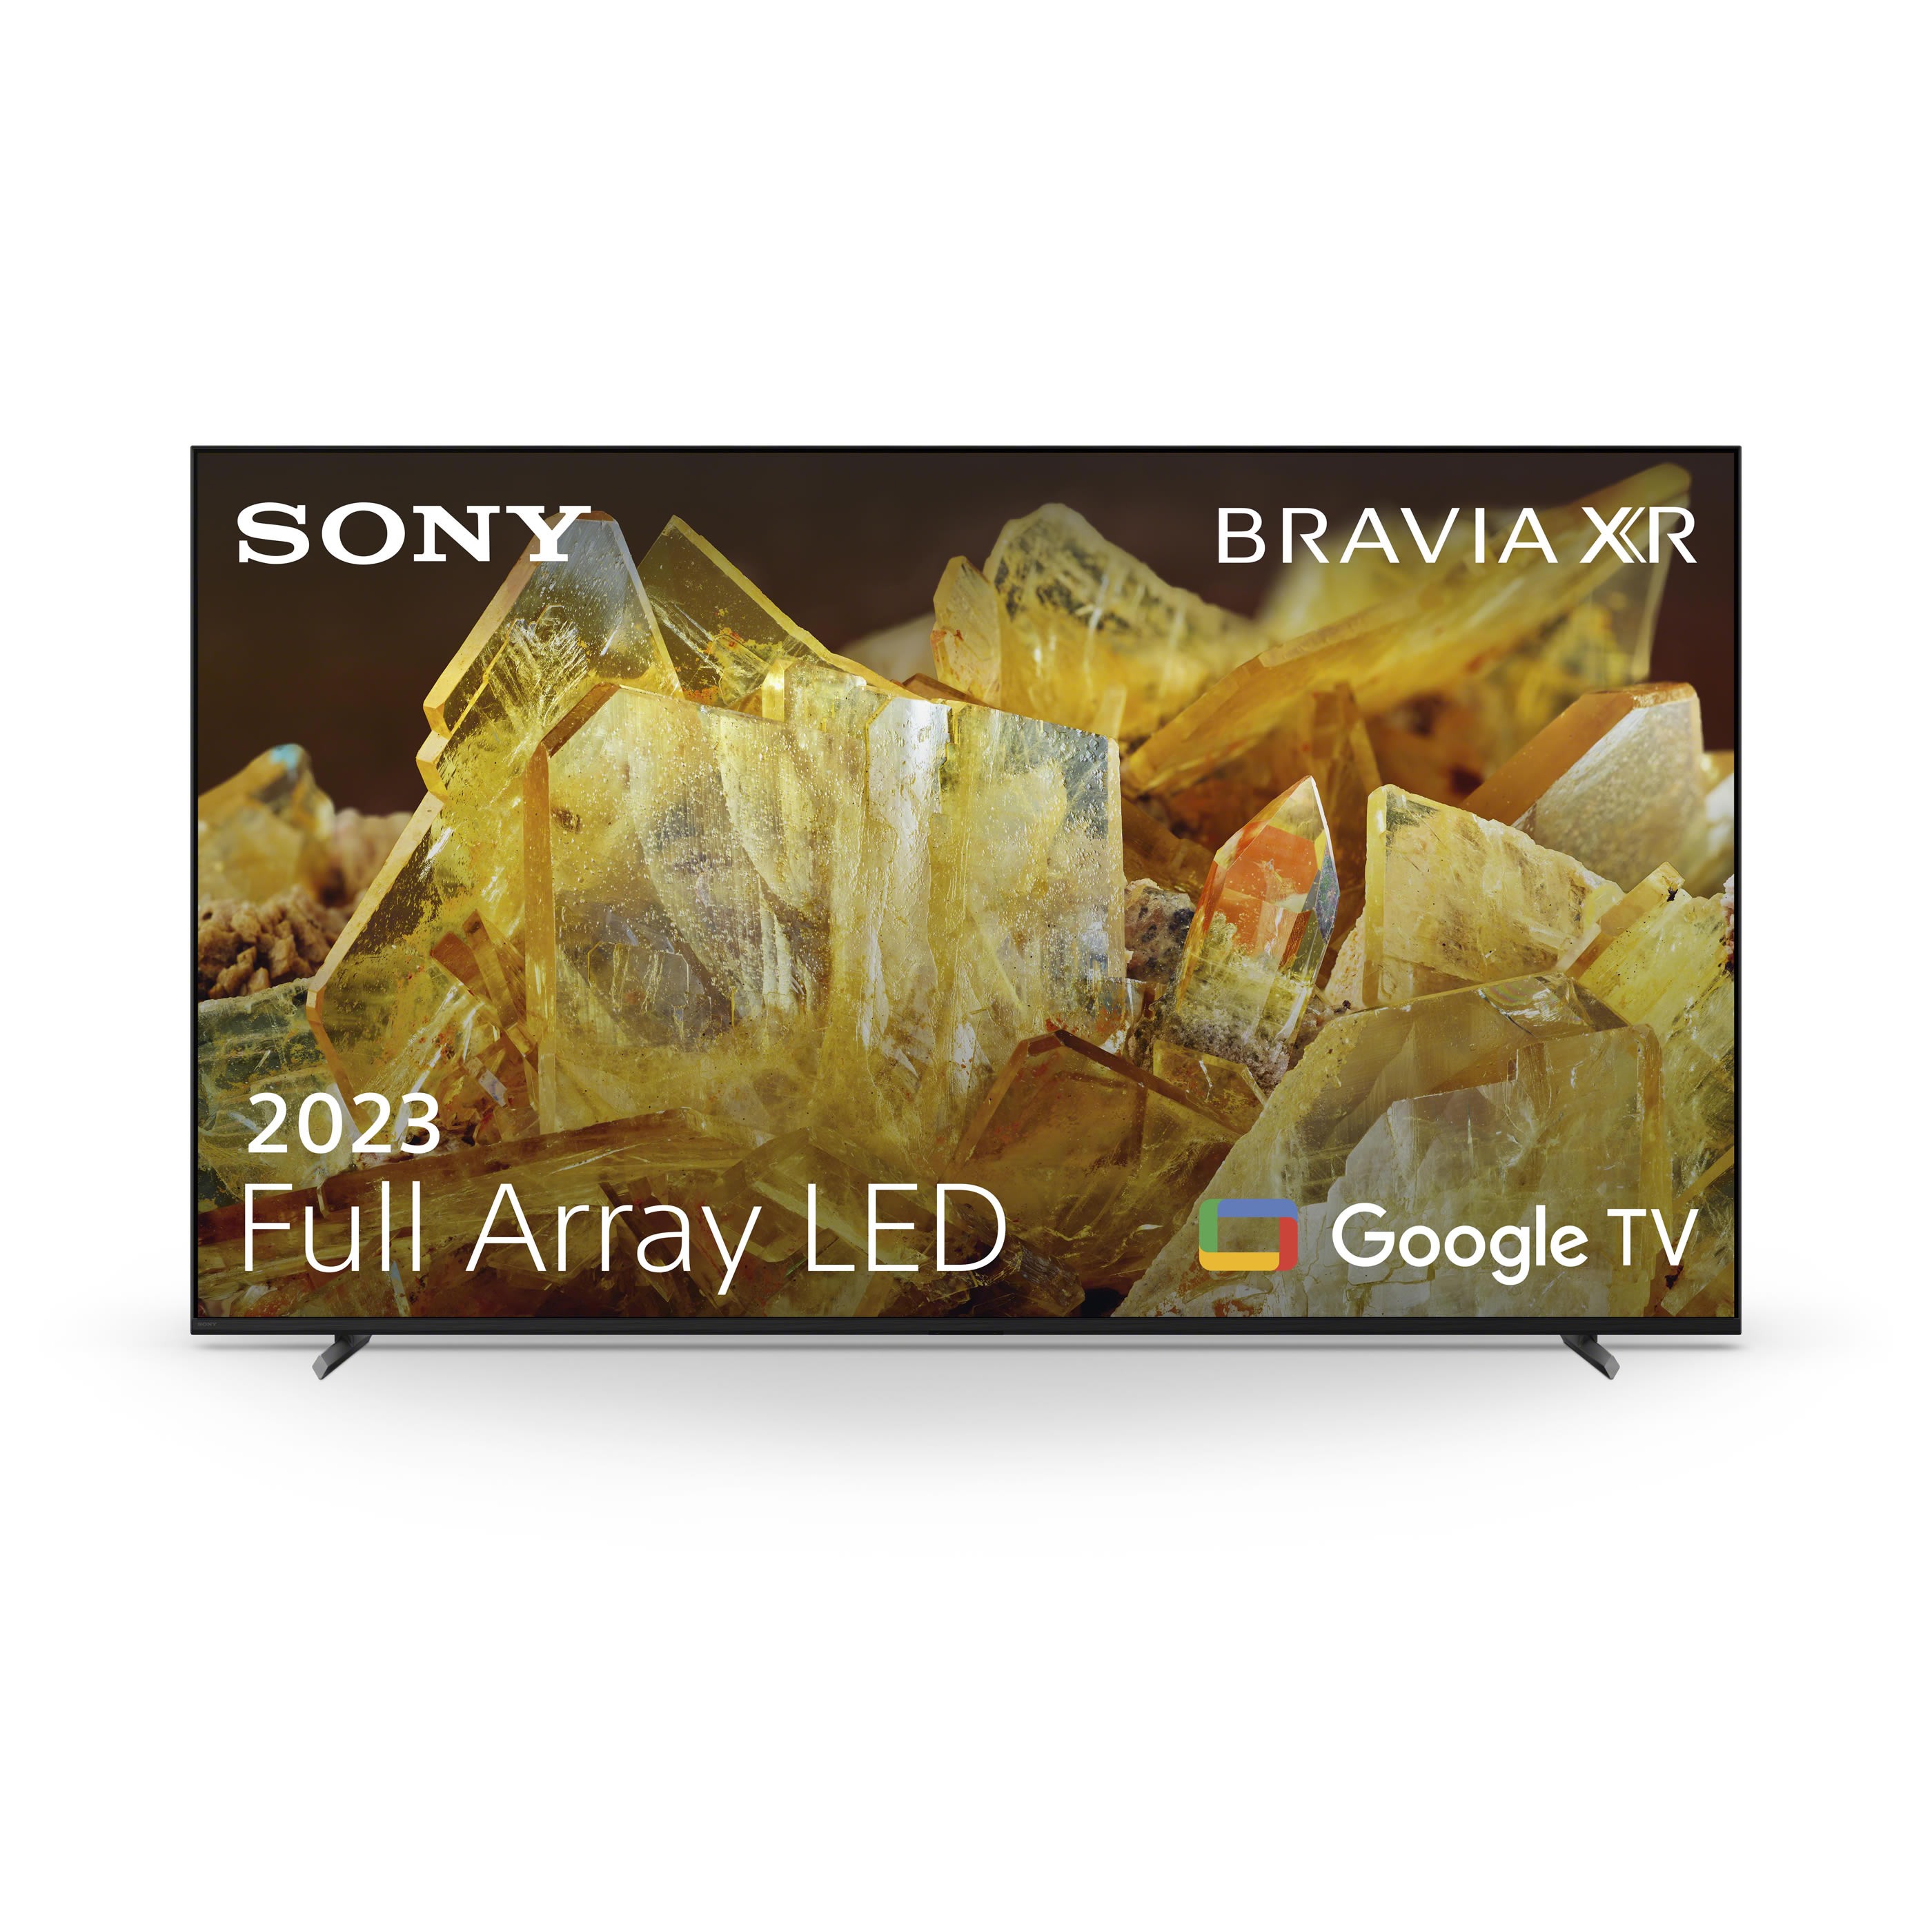 Sony 75inch 4K HDR Full Array LED SMART TV Google Wi-Fi